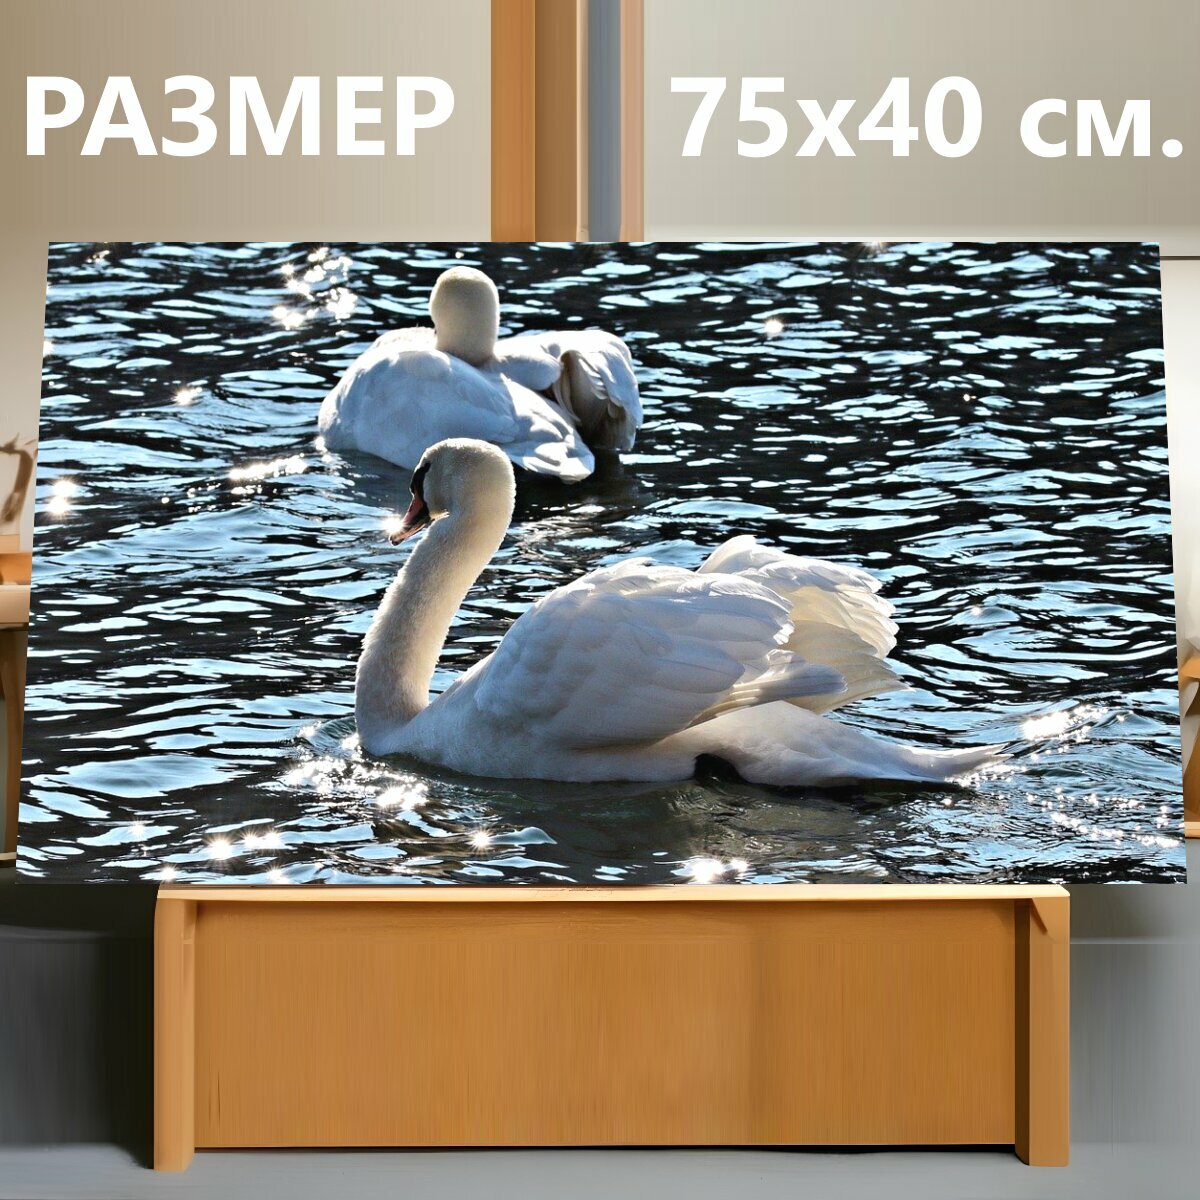 Картина на холсте "Лебедь, лебеди, водоплавающая птица" на подрамнике 75х40 см. для интерьера